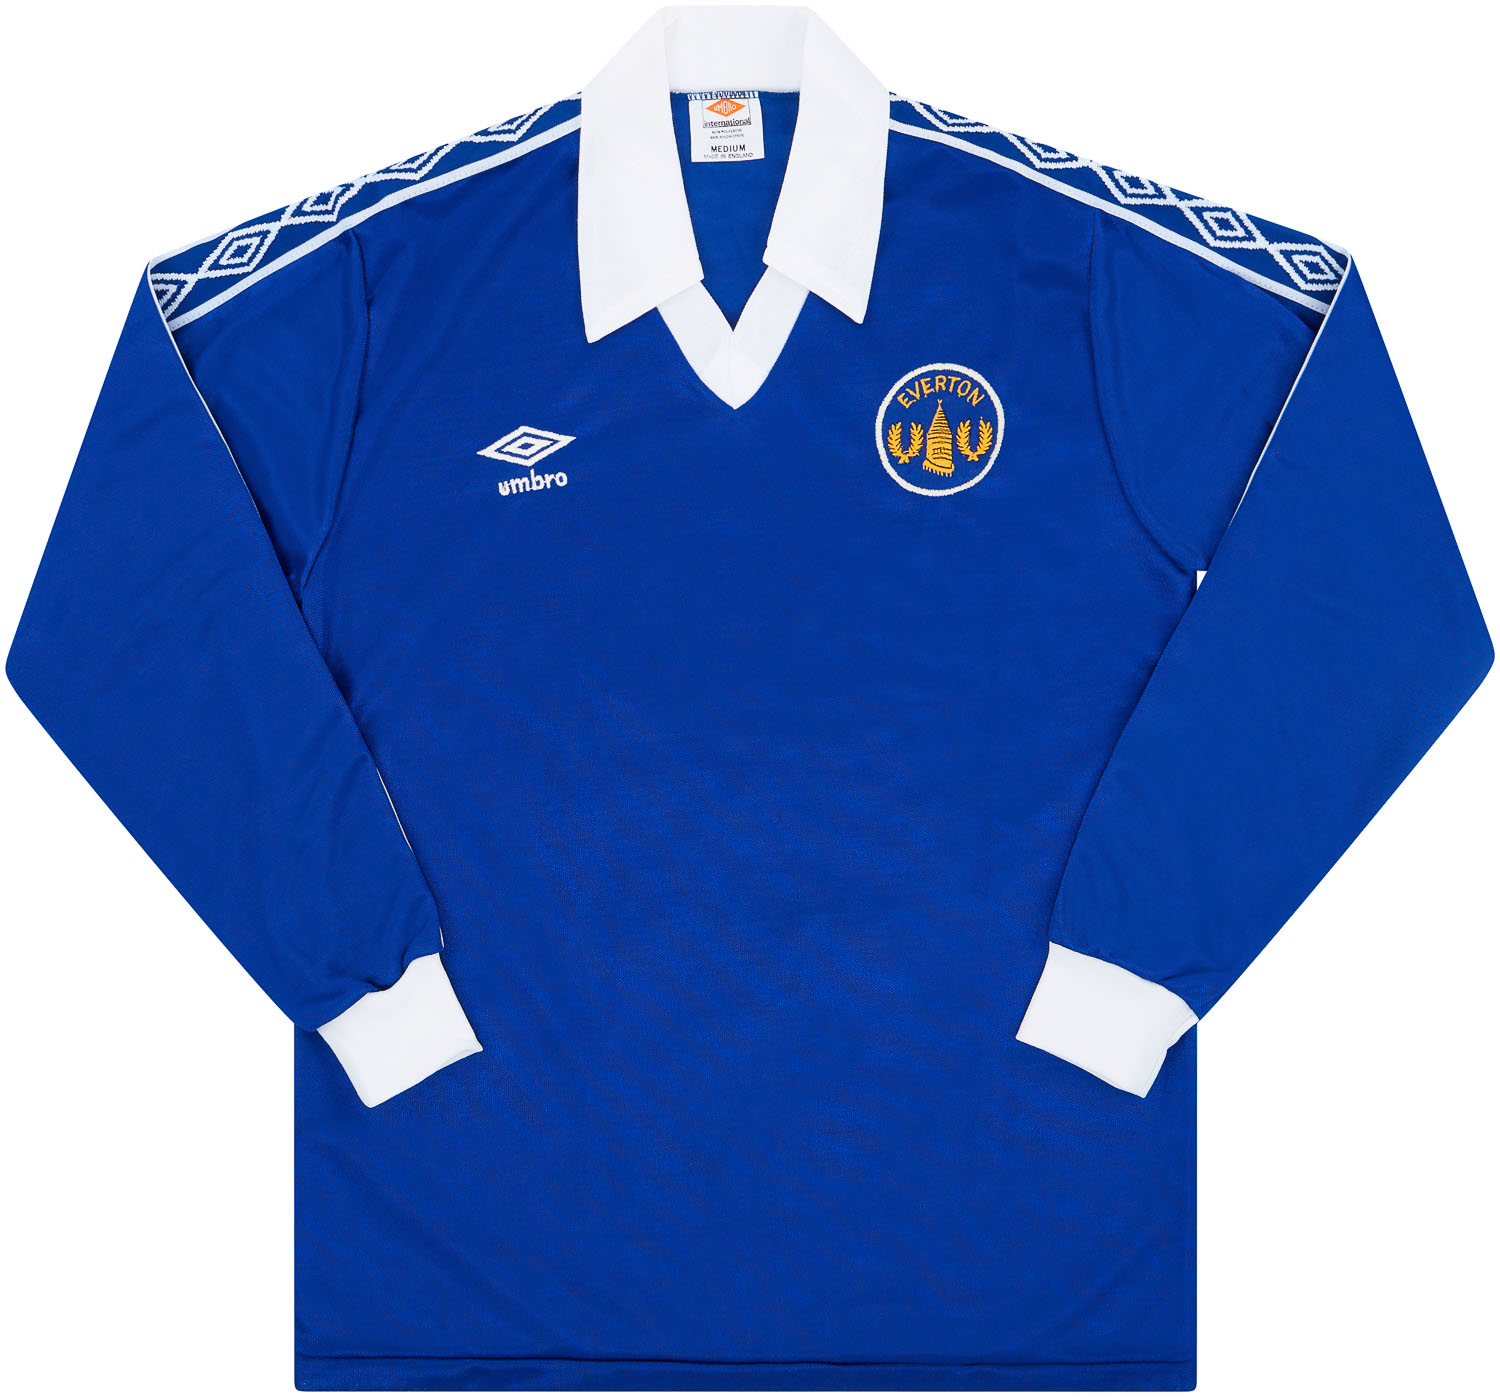 1982 Everton Home Shirt